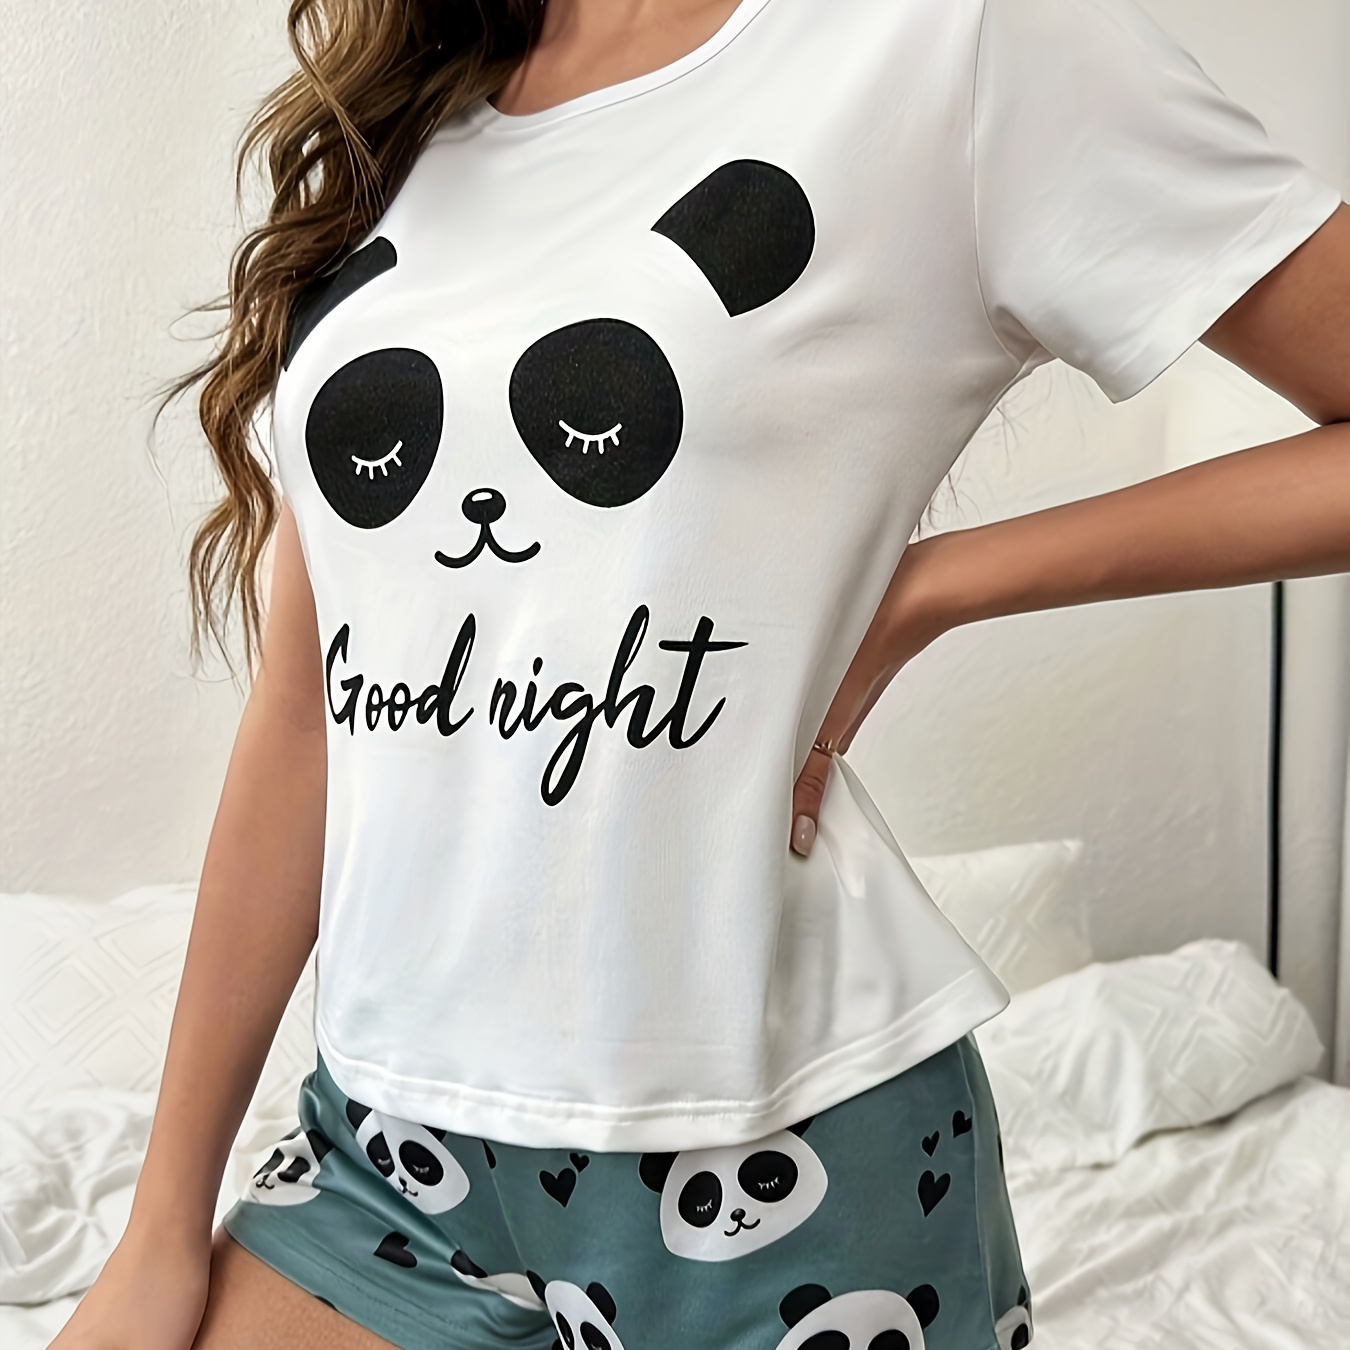 

Cute Panda & Slogan Print Pajama Set, Short Sleeve Round Neck Top & Elastic Shorts, Women's Sleepwear